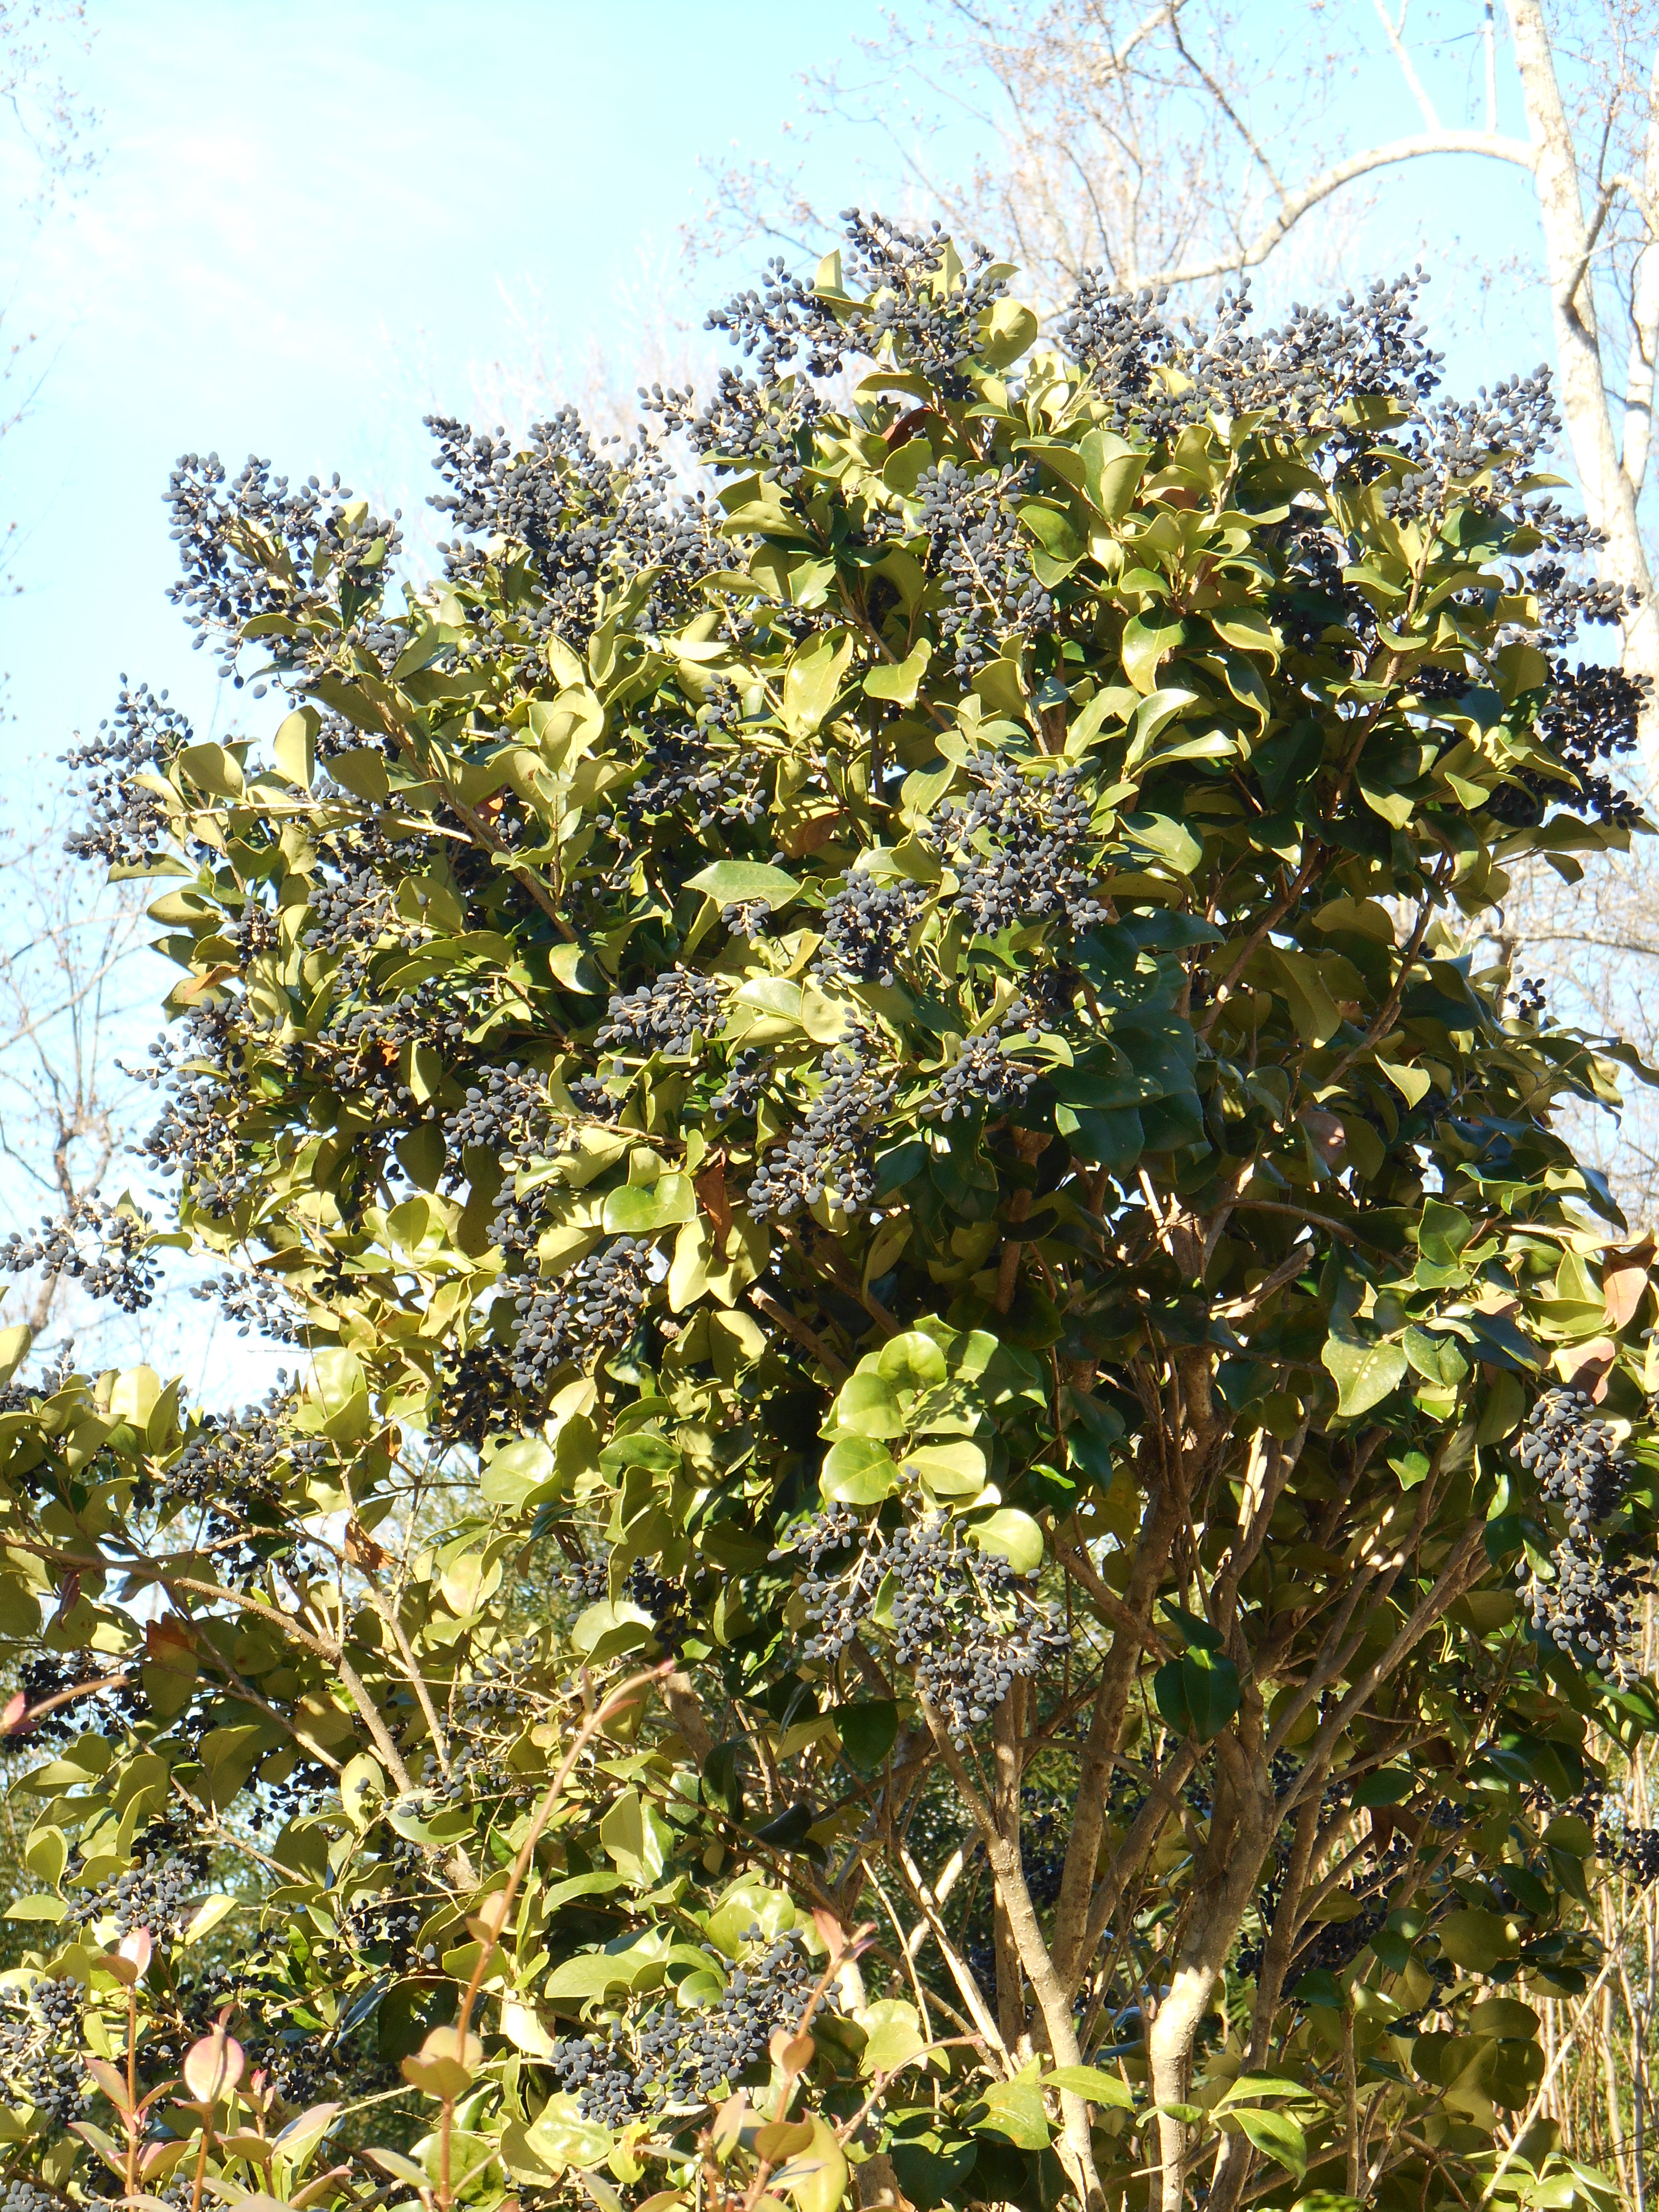 Image of Japanese privet tree in winter